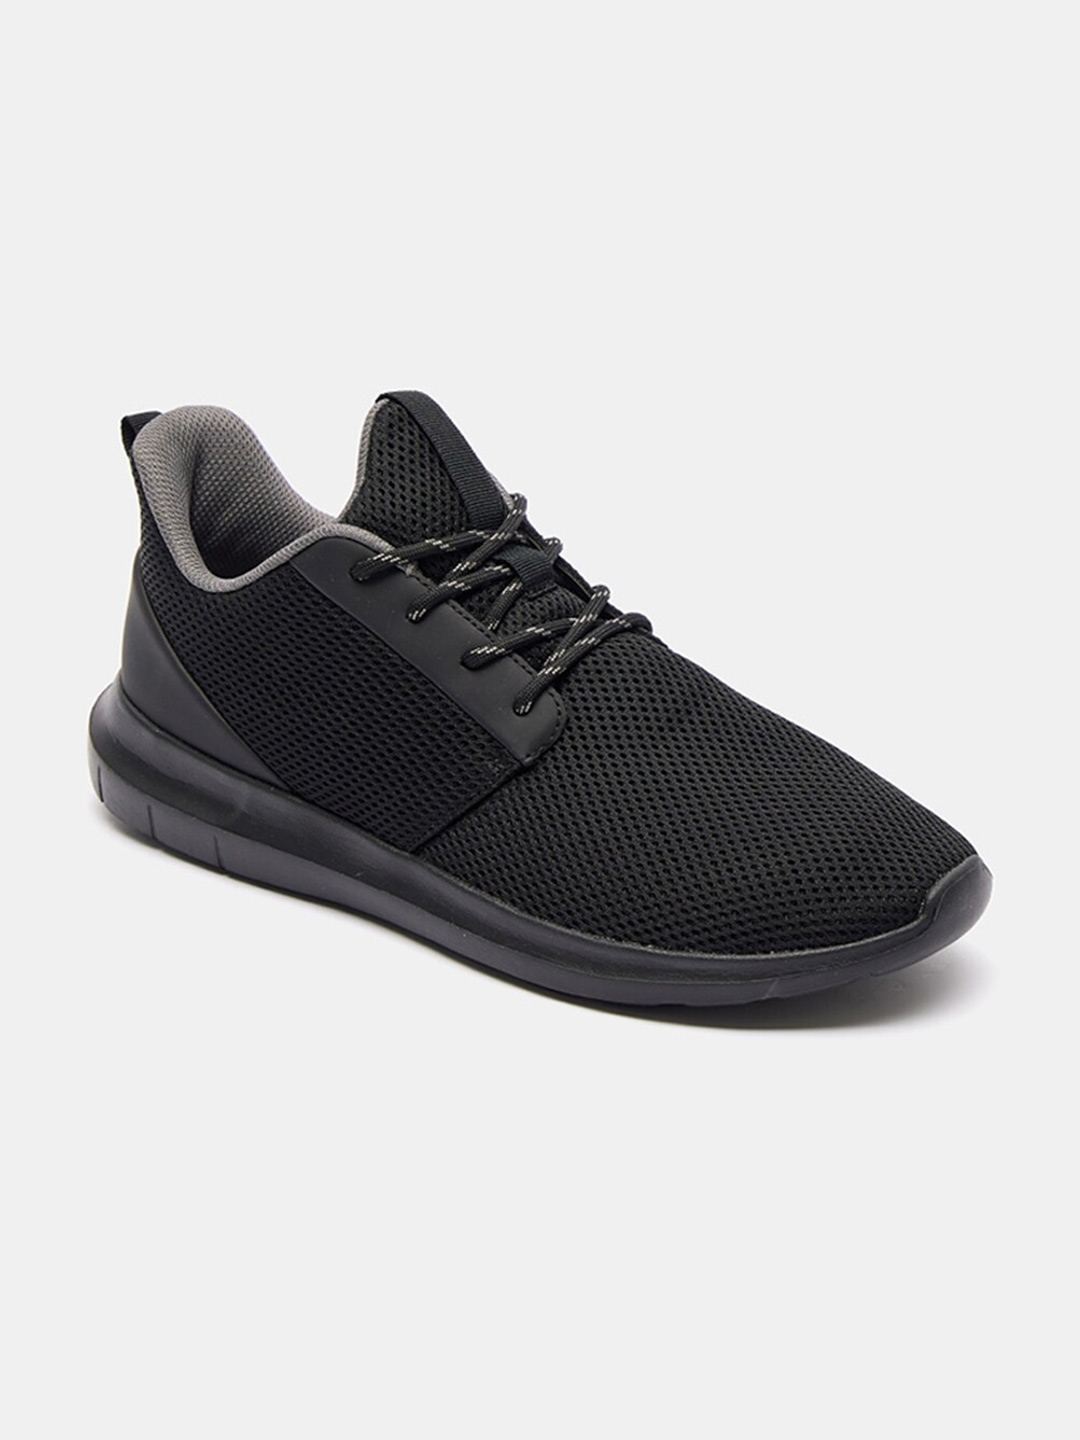 Buy Shoexpress Men Black Textile Walking Non Marking Shoes - Sports ...